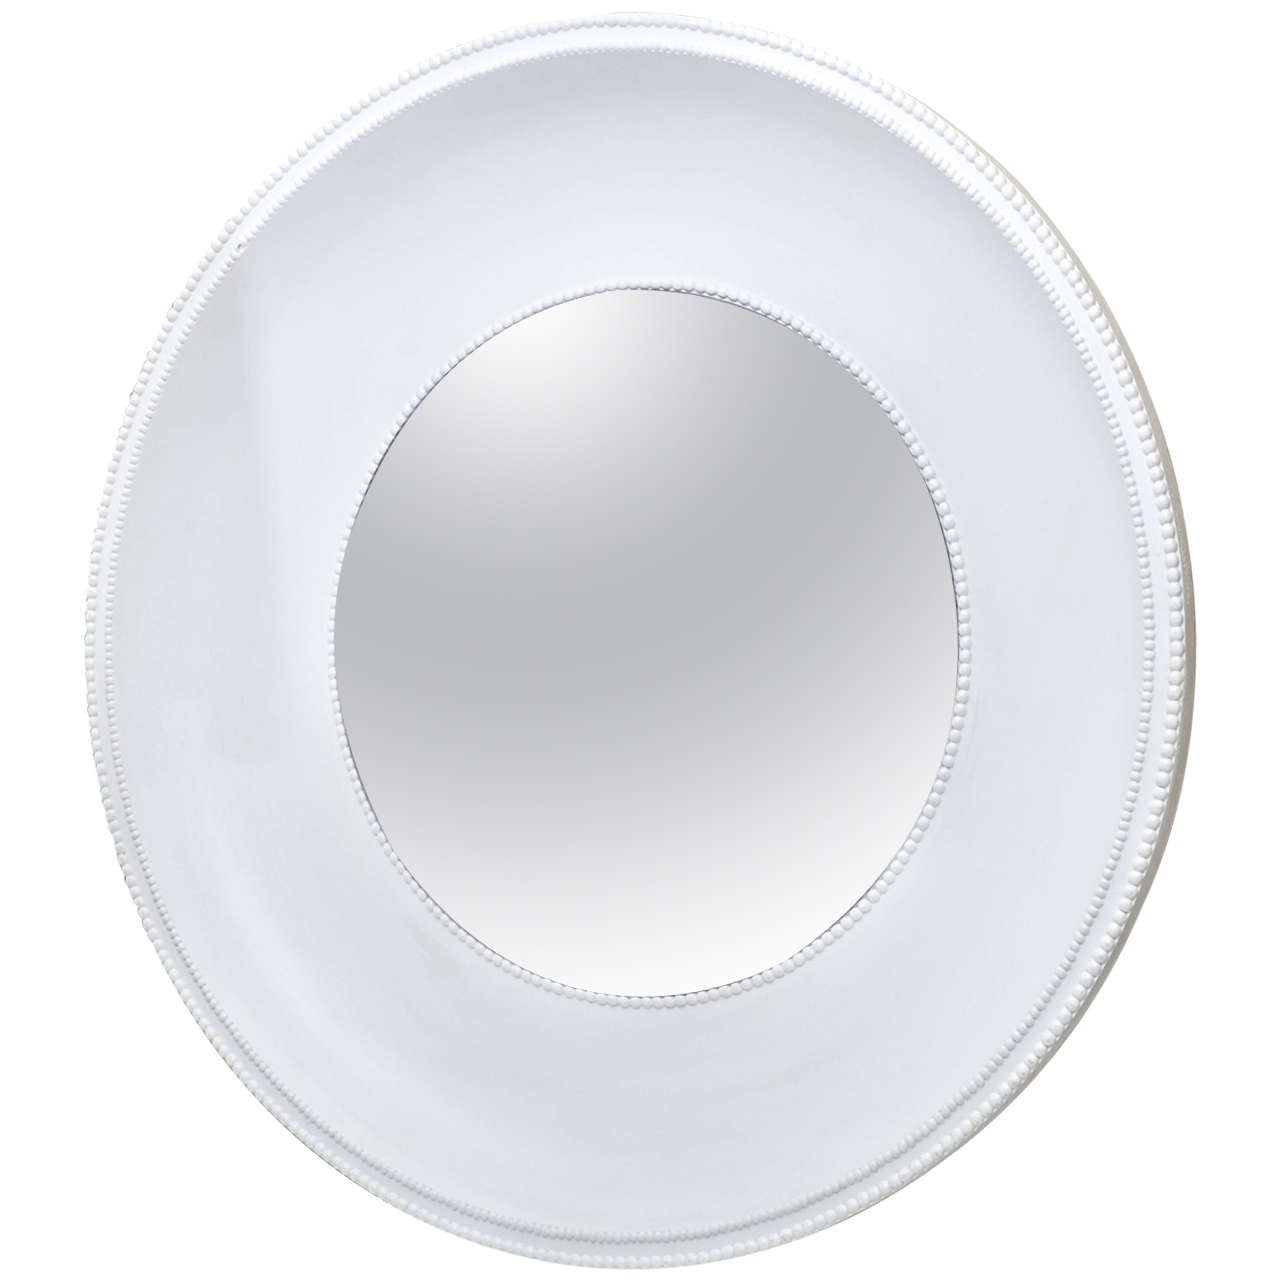 Very Impressive Custom-Made Round White Plaster Mirror For Sale